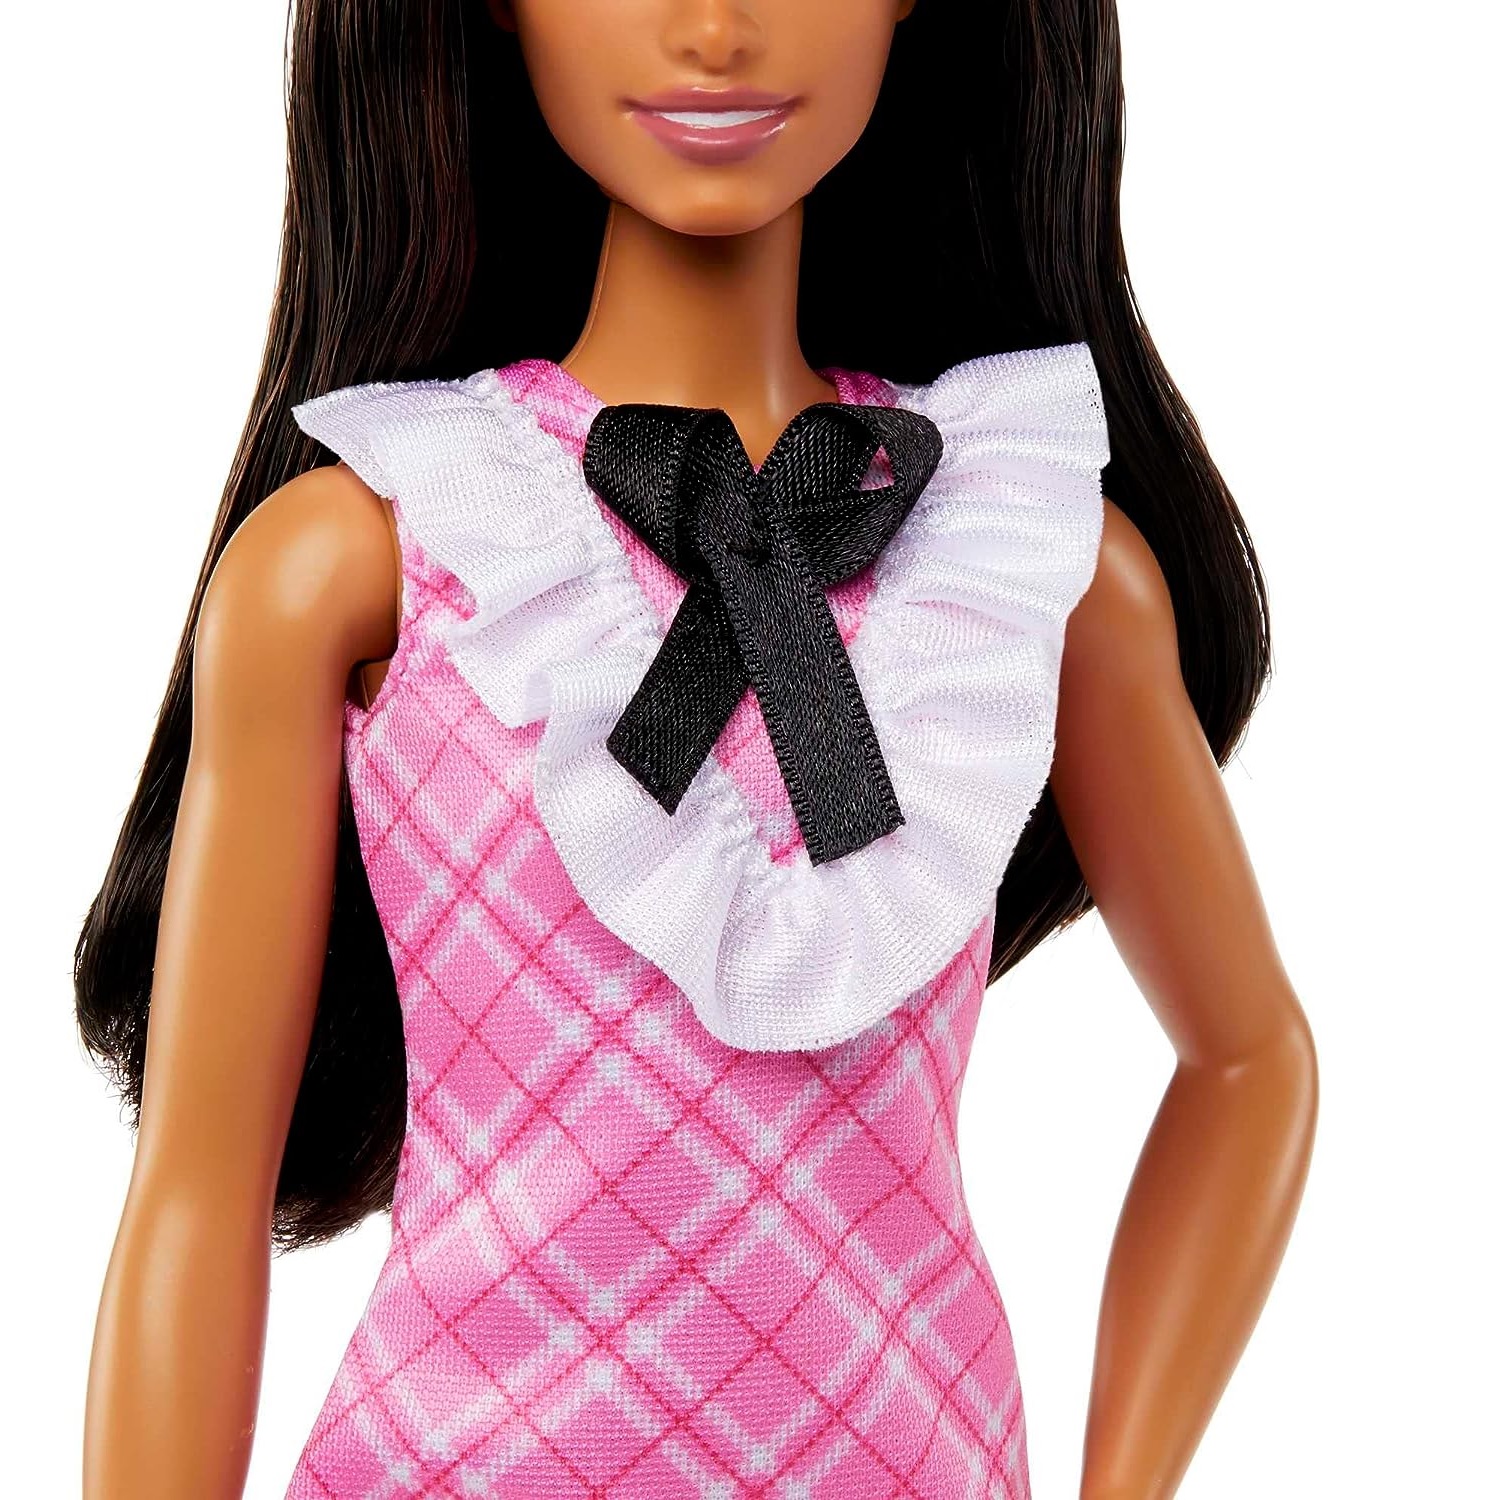 Кукла Barbie HJT06 209 в розовом платье